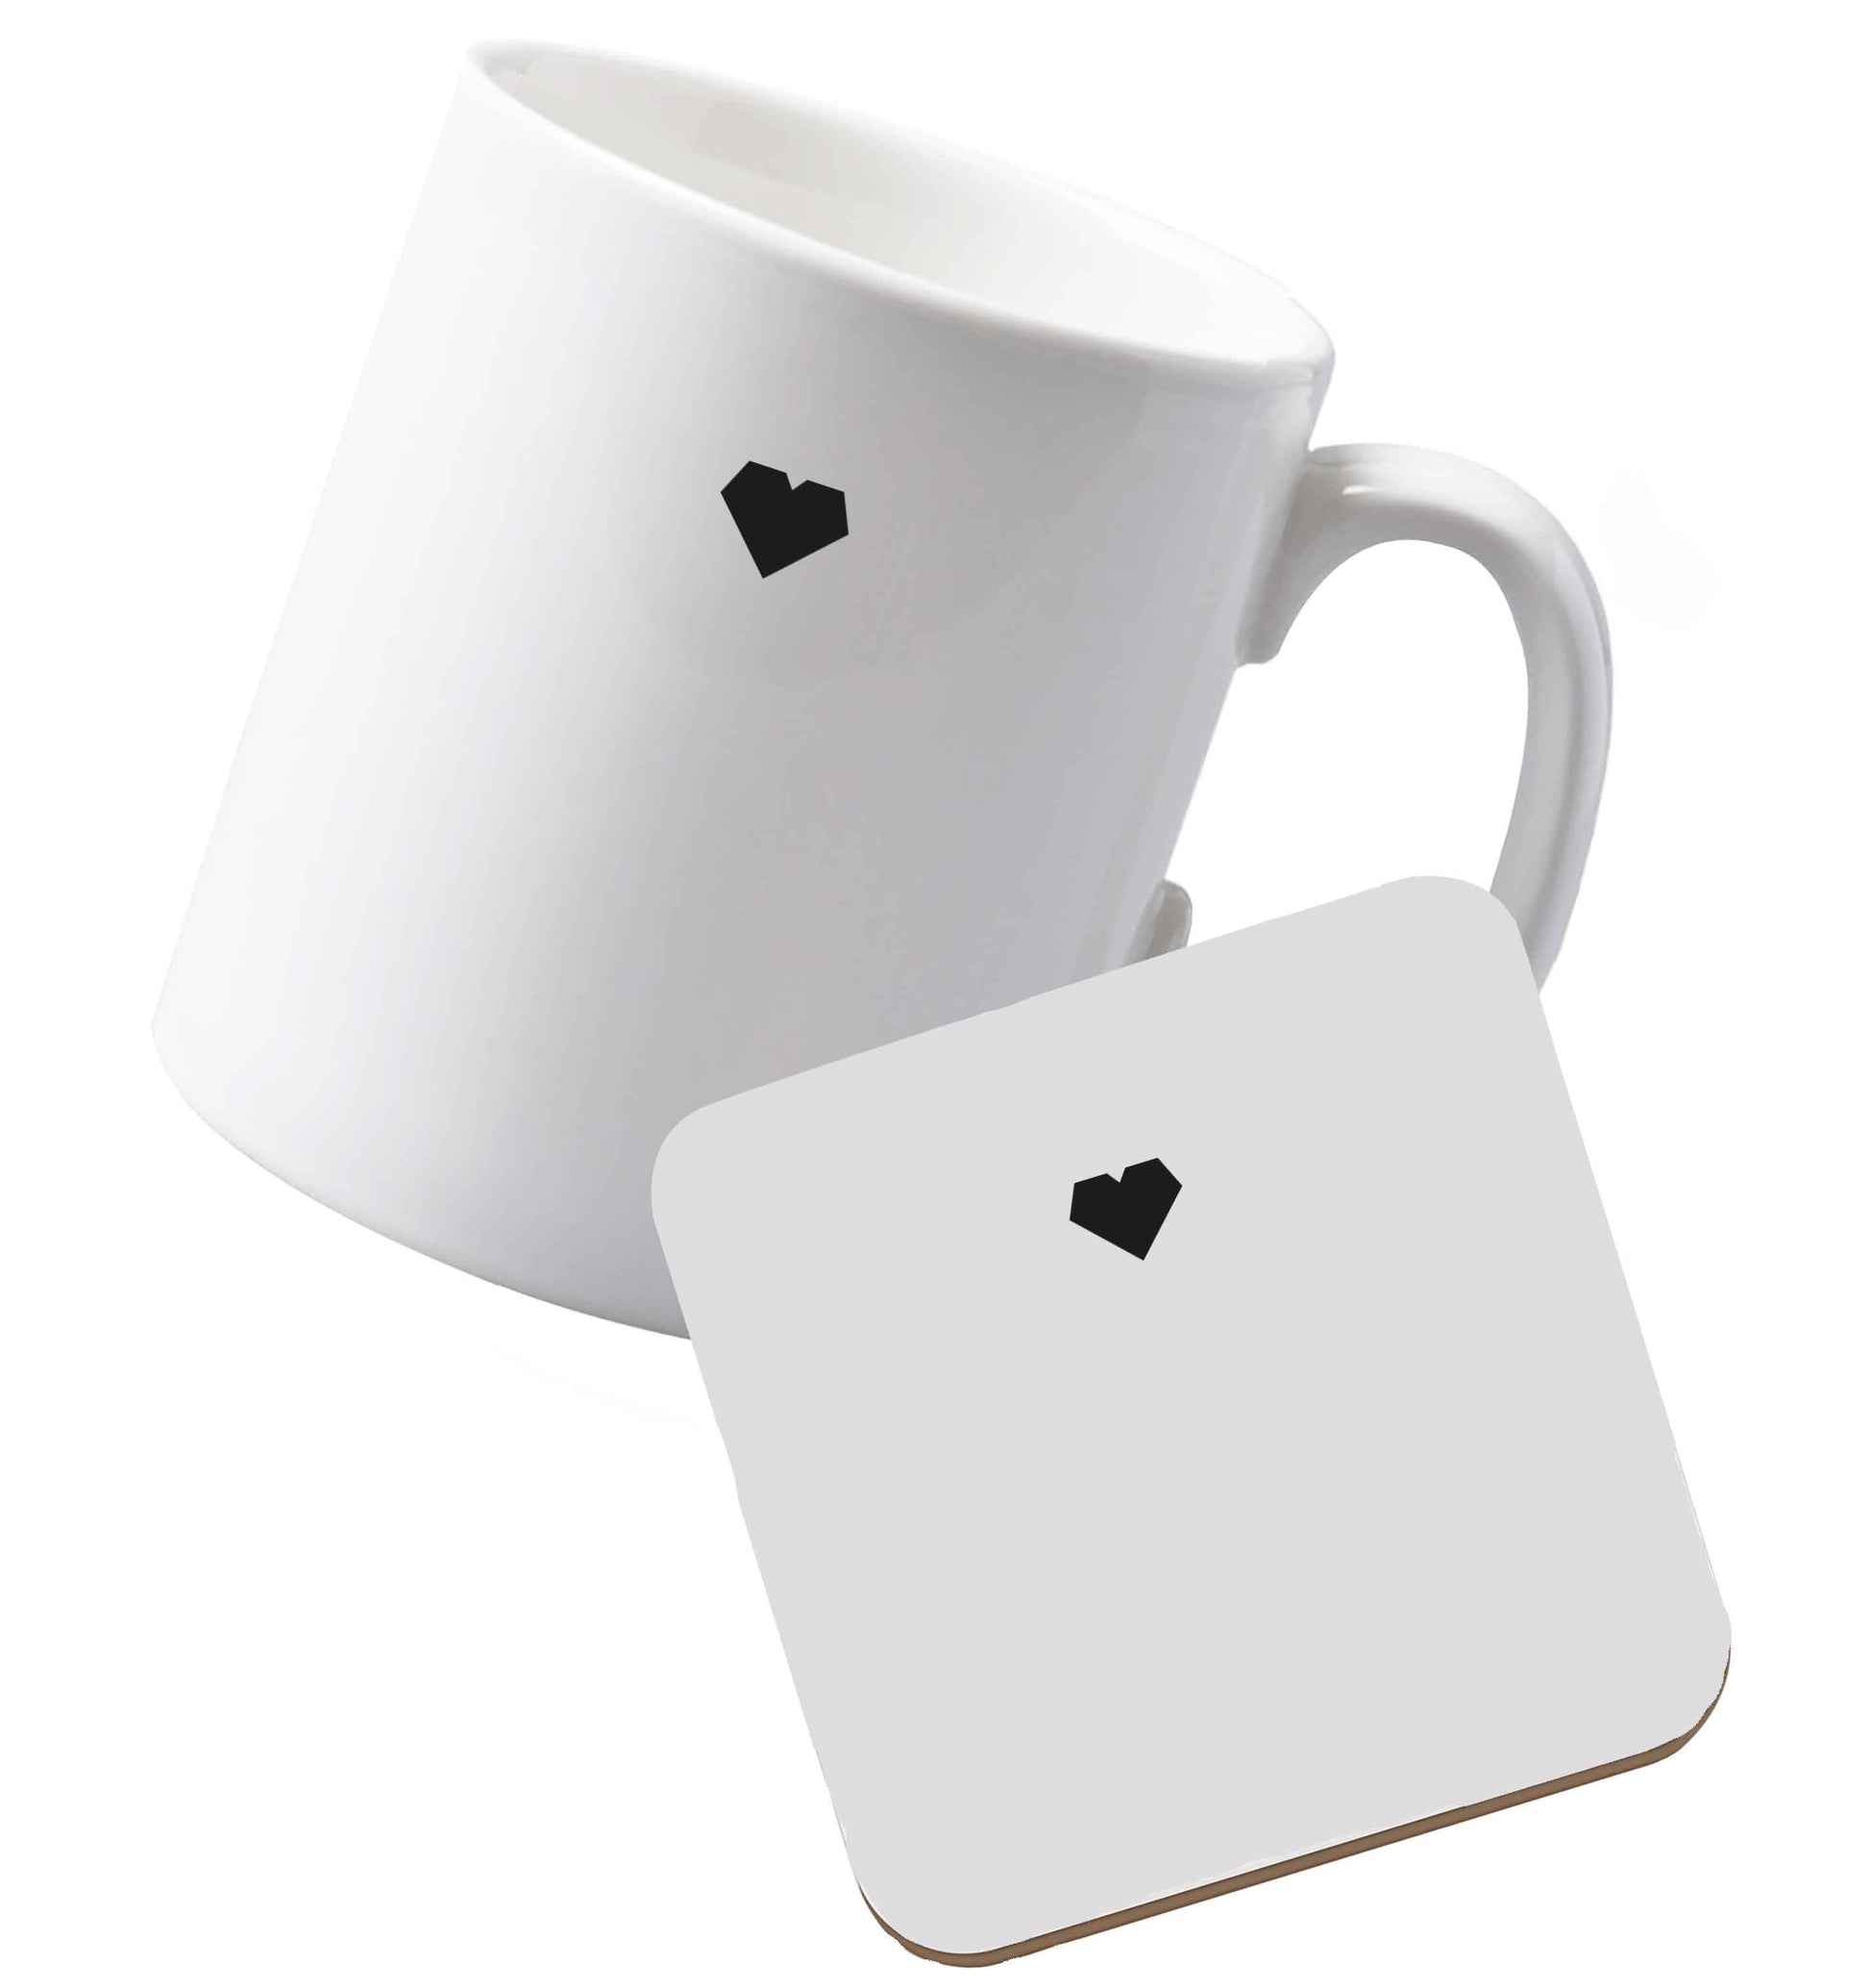 10 oz Ceramic mug and coaster Tiny heart both sides